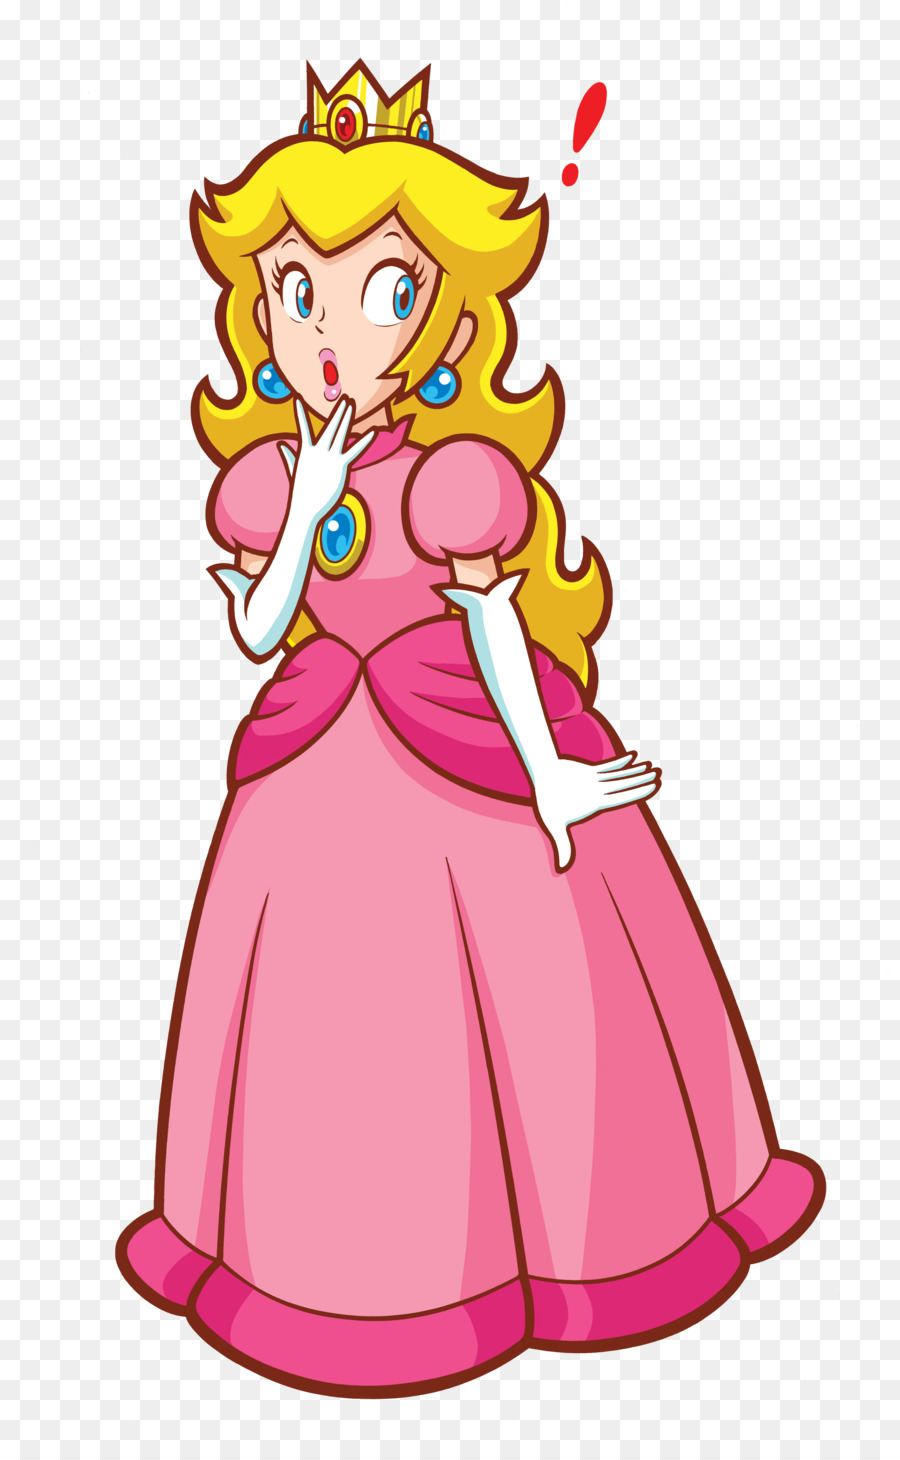 Super Princess Peach Super Mario Bros. 2 - peach png ...